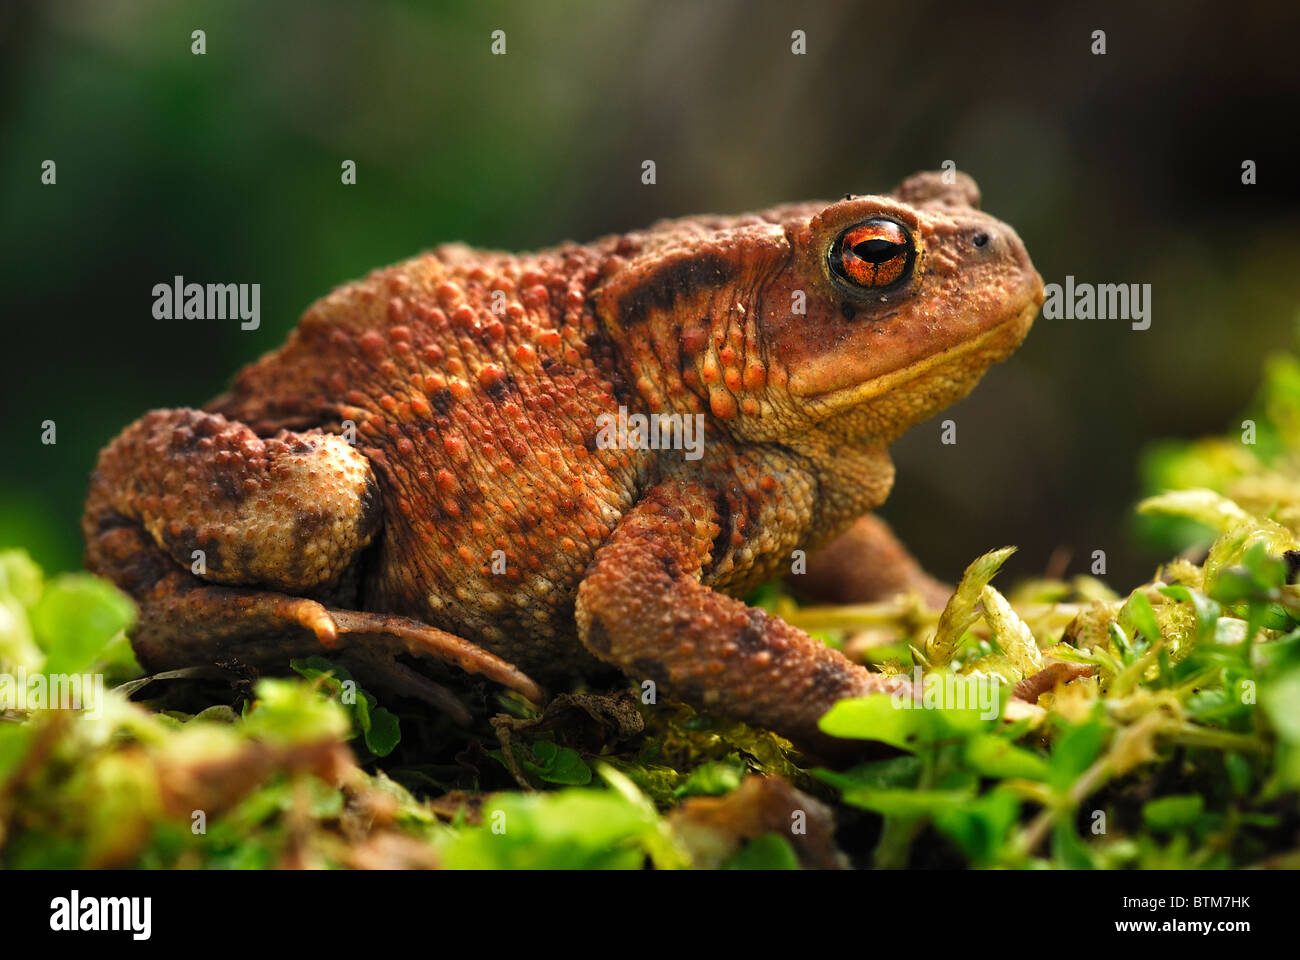 Male common toad in spring. Dorset, UK April 2009 Stock Photo